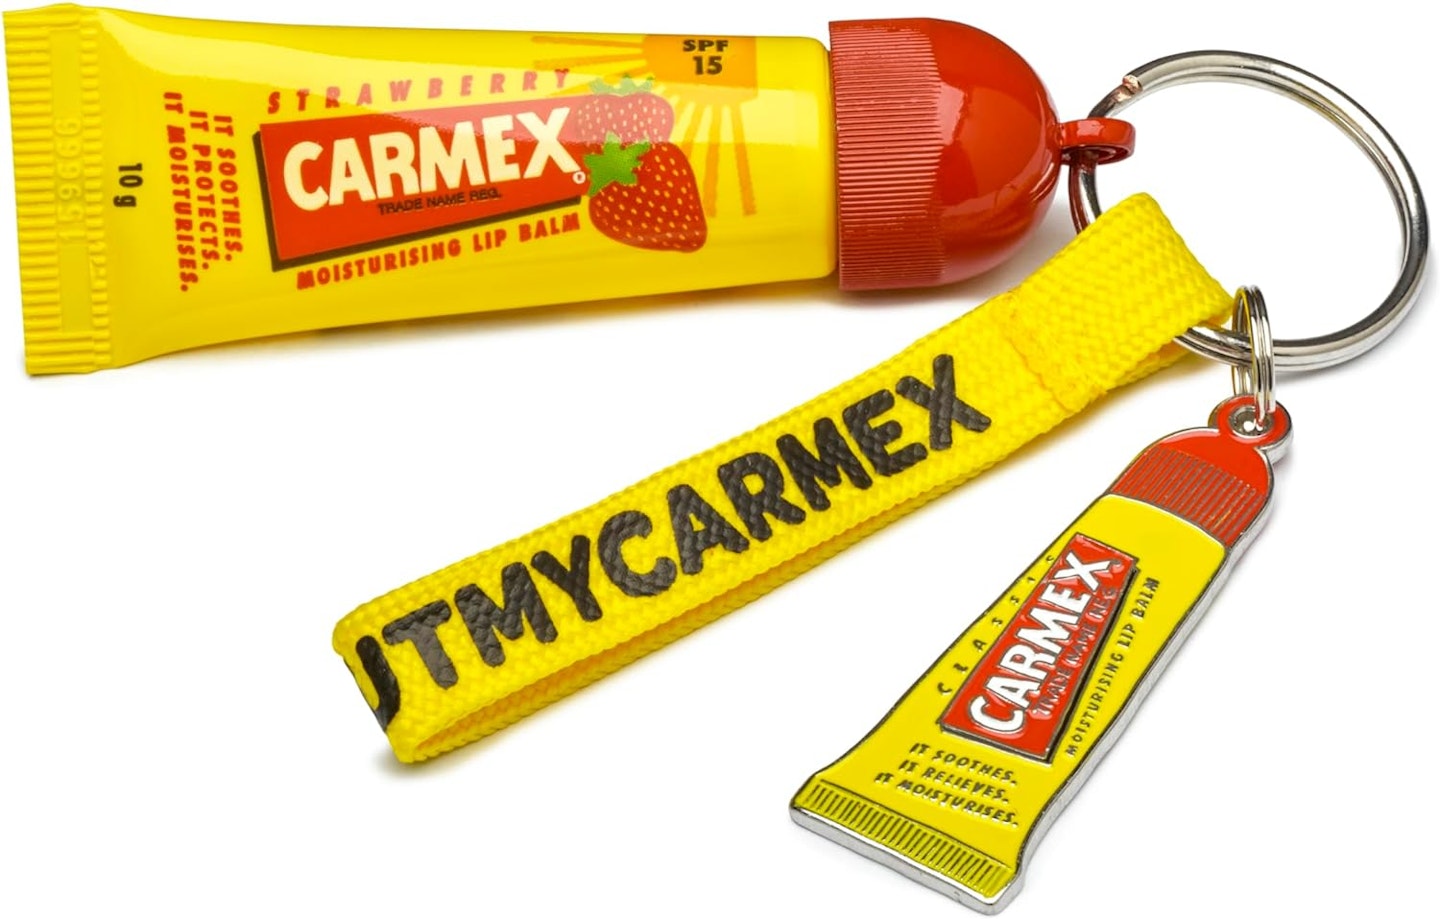 CARMEX Limited Edition Keyring Set